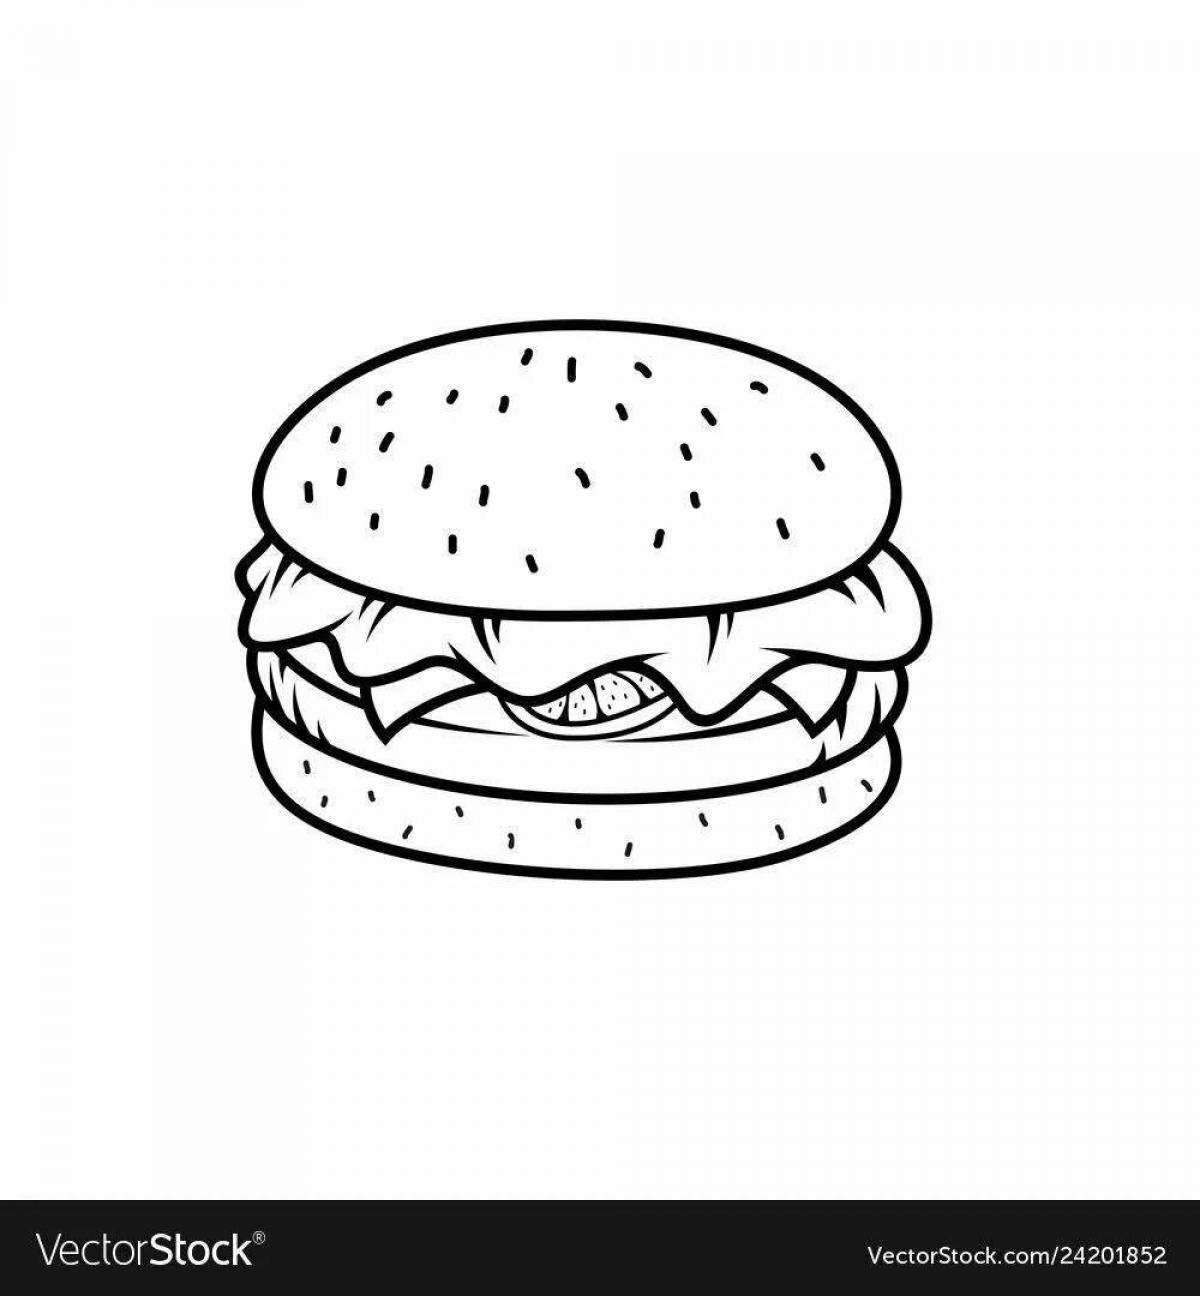 Fancy hamburger coloring page